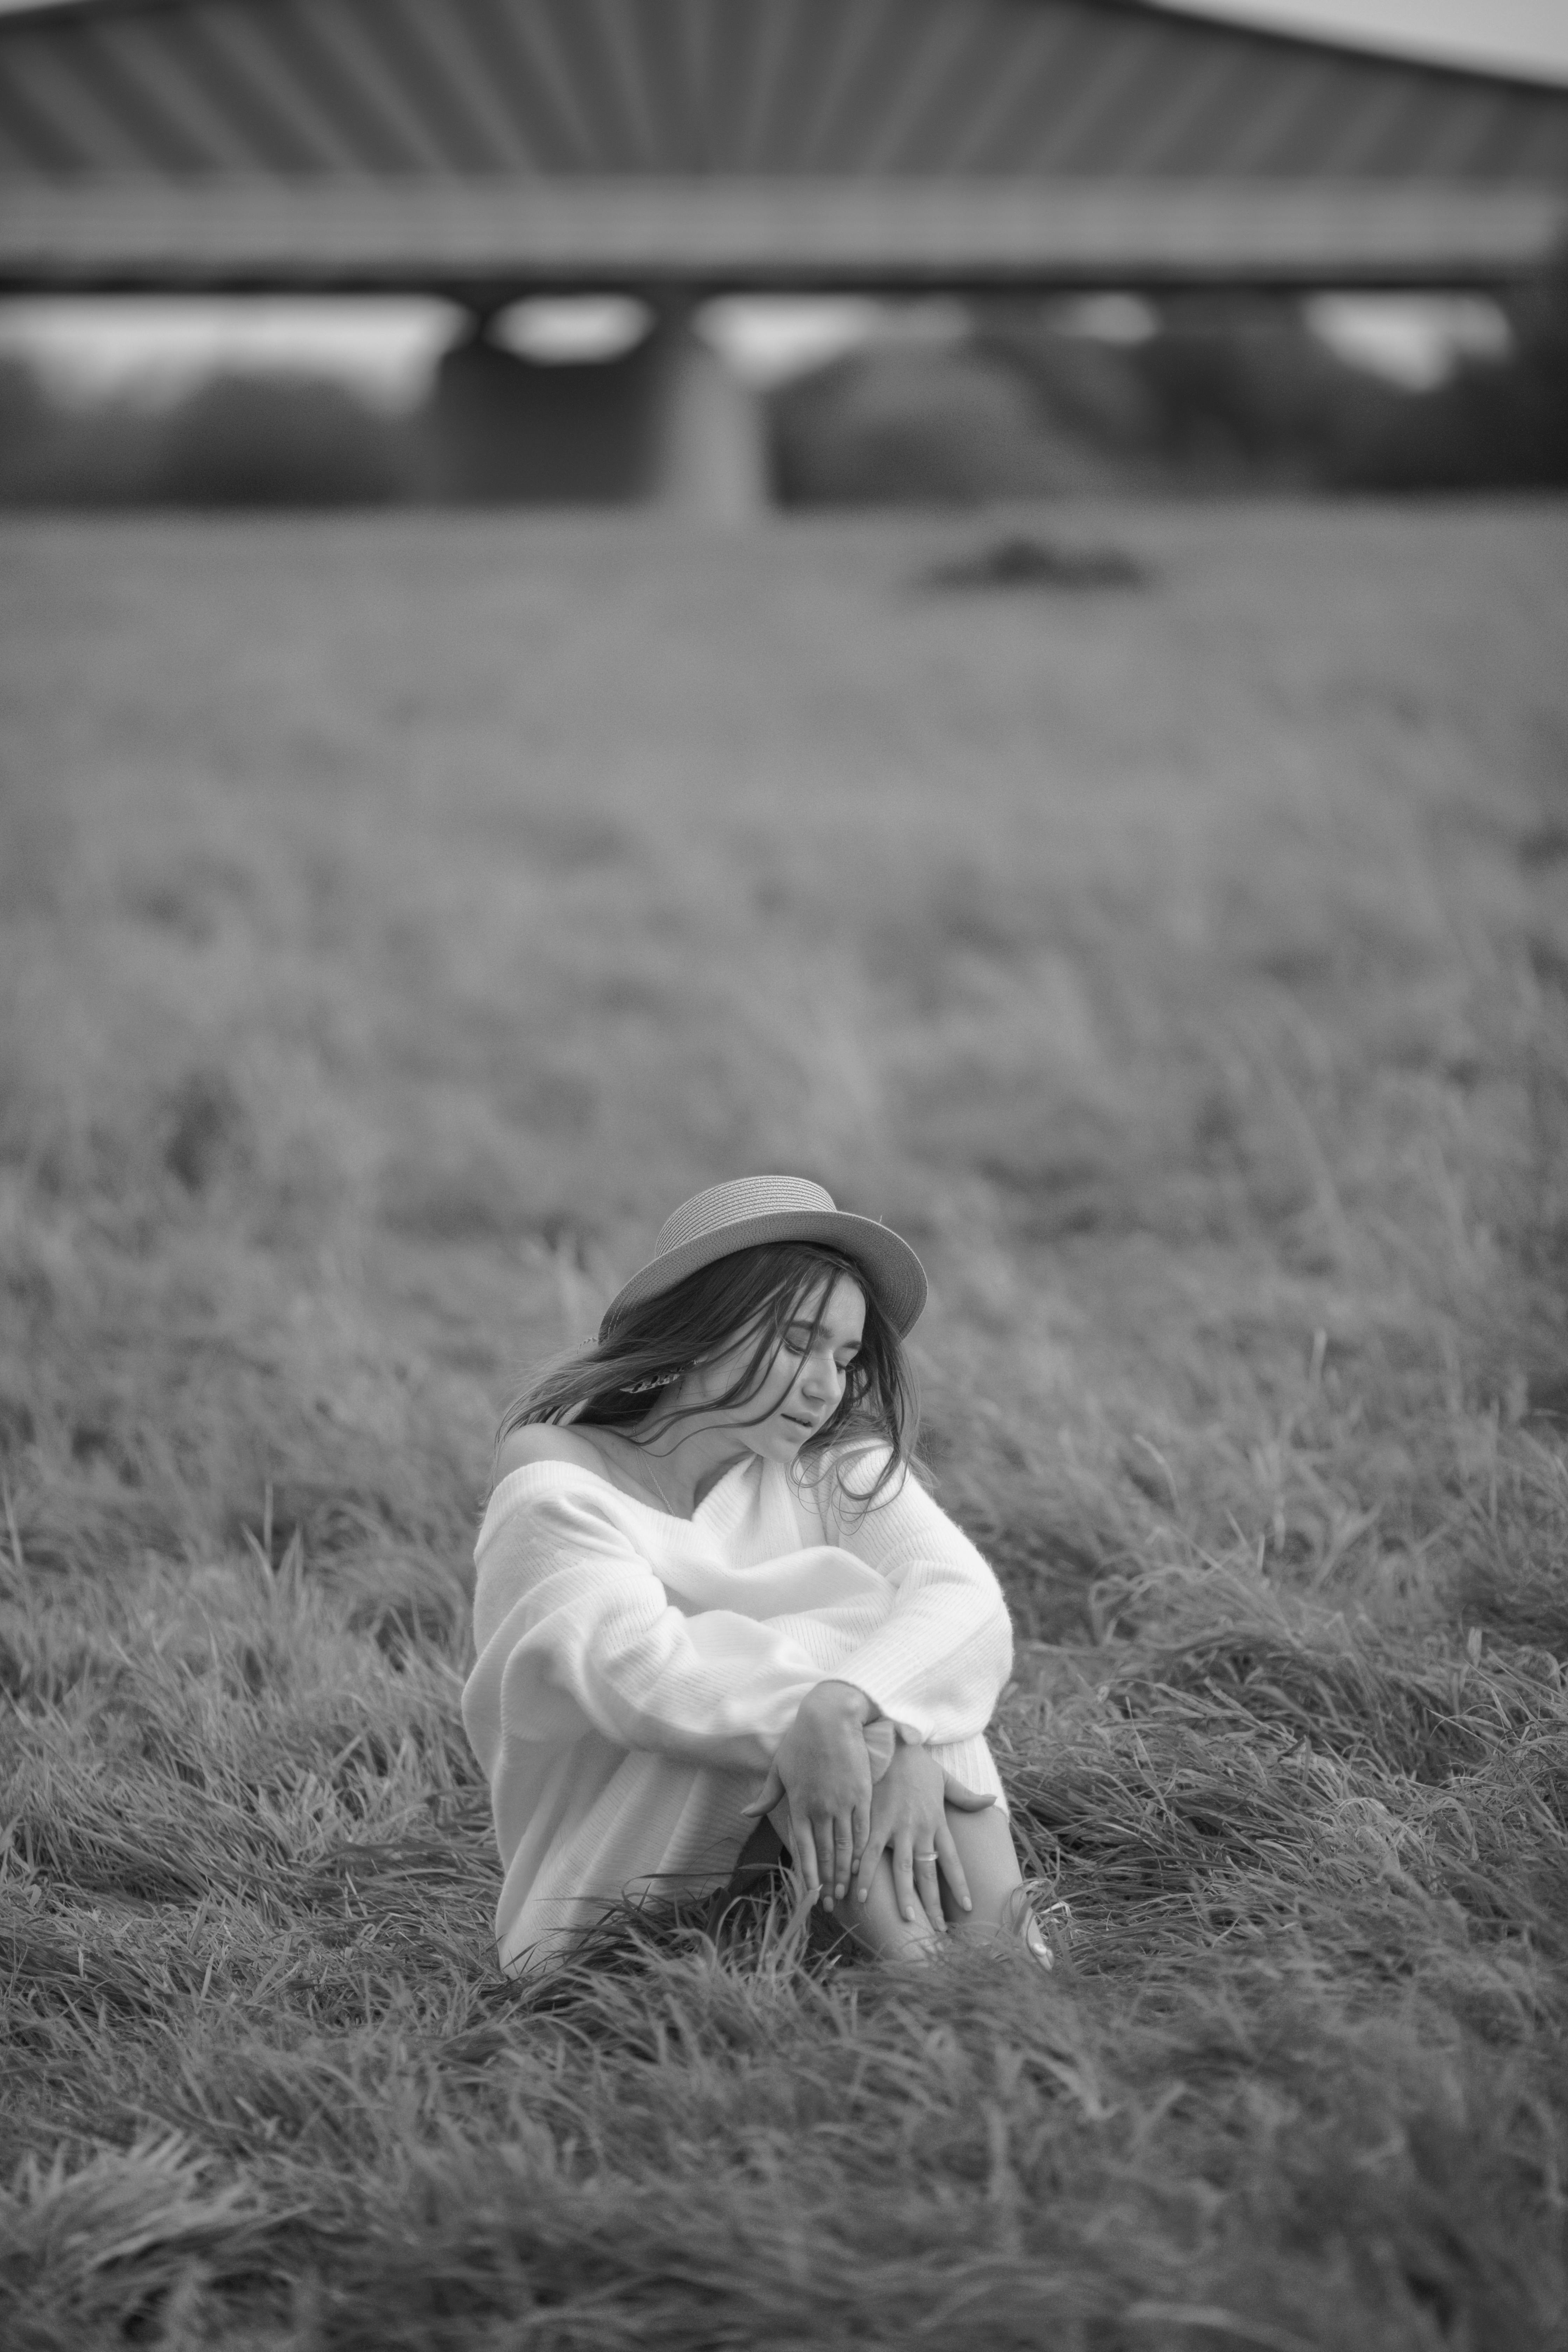 Sad woman in a field | Source: Pexels